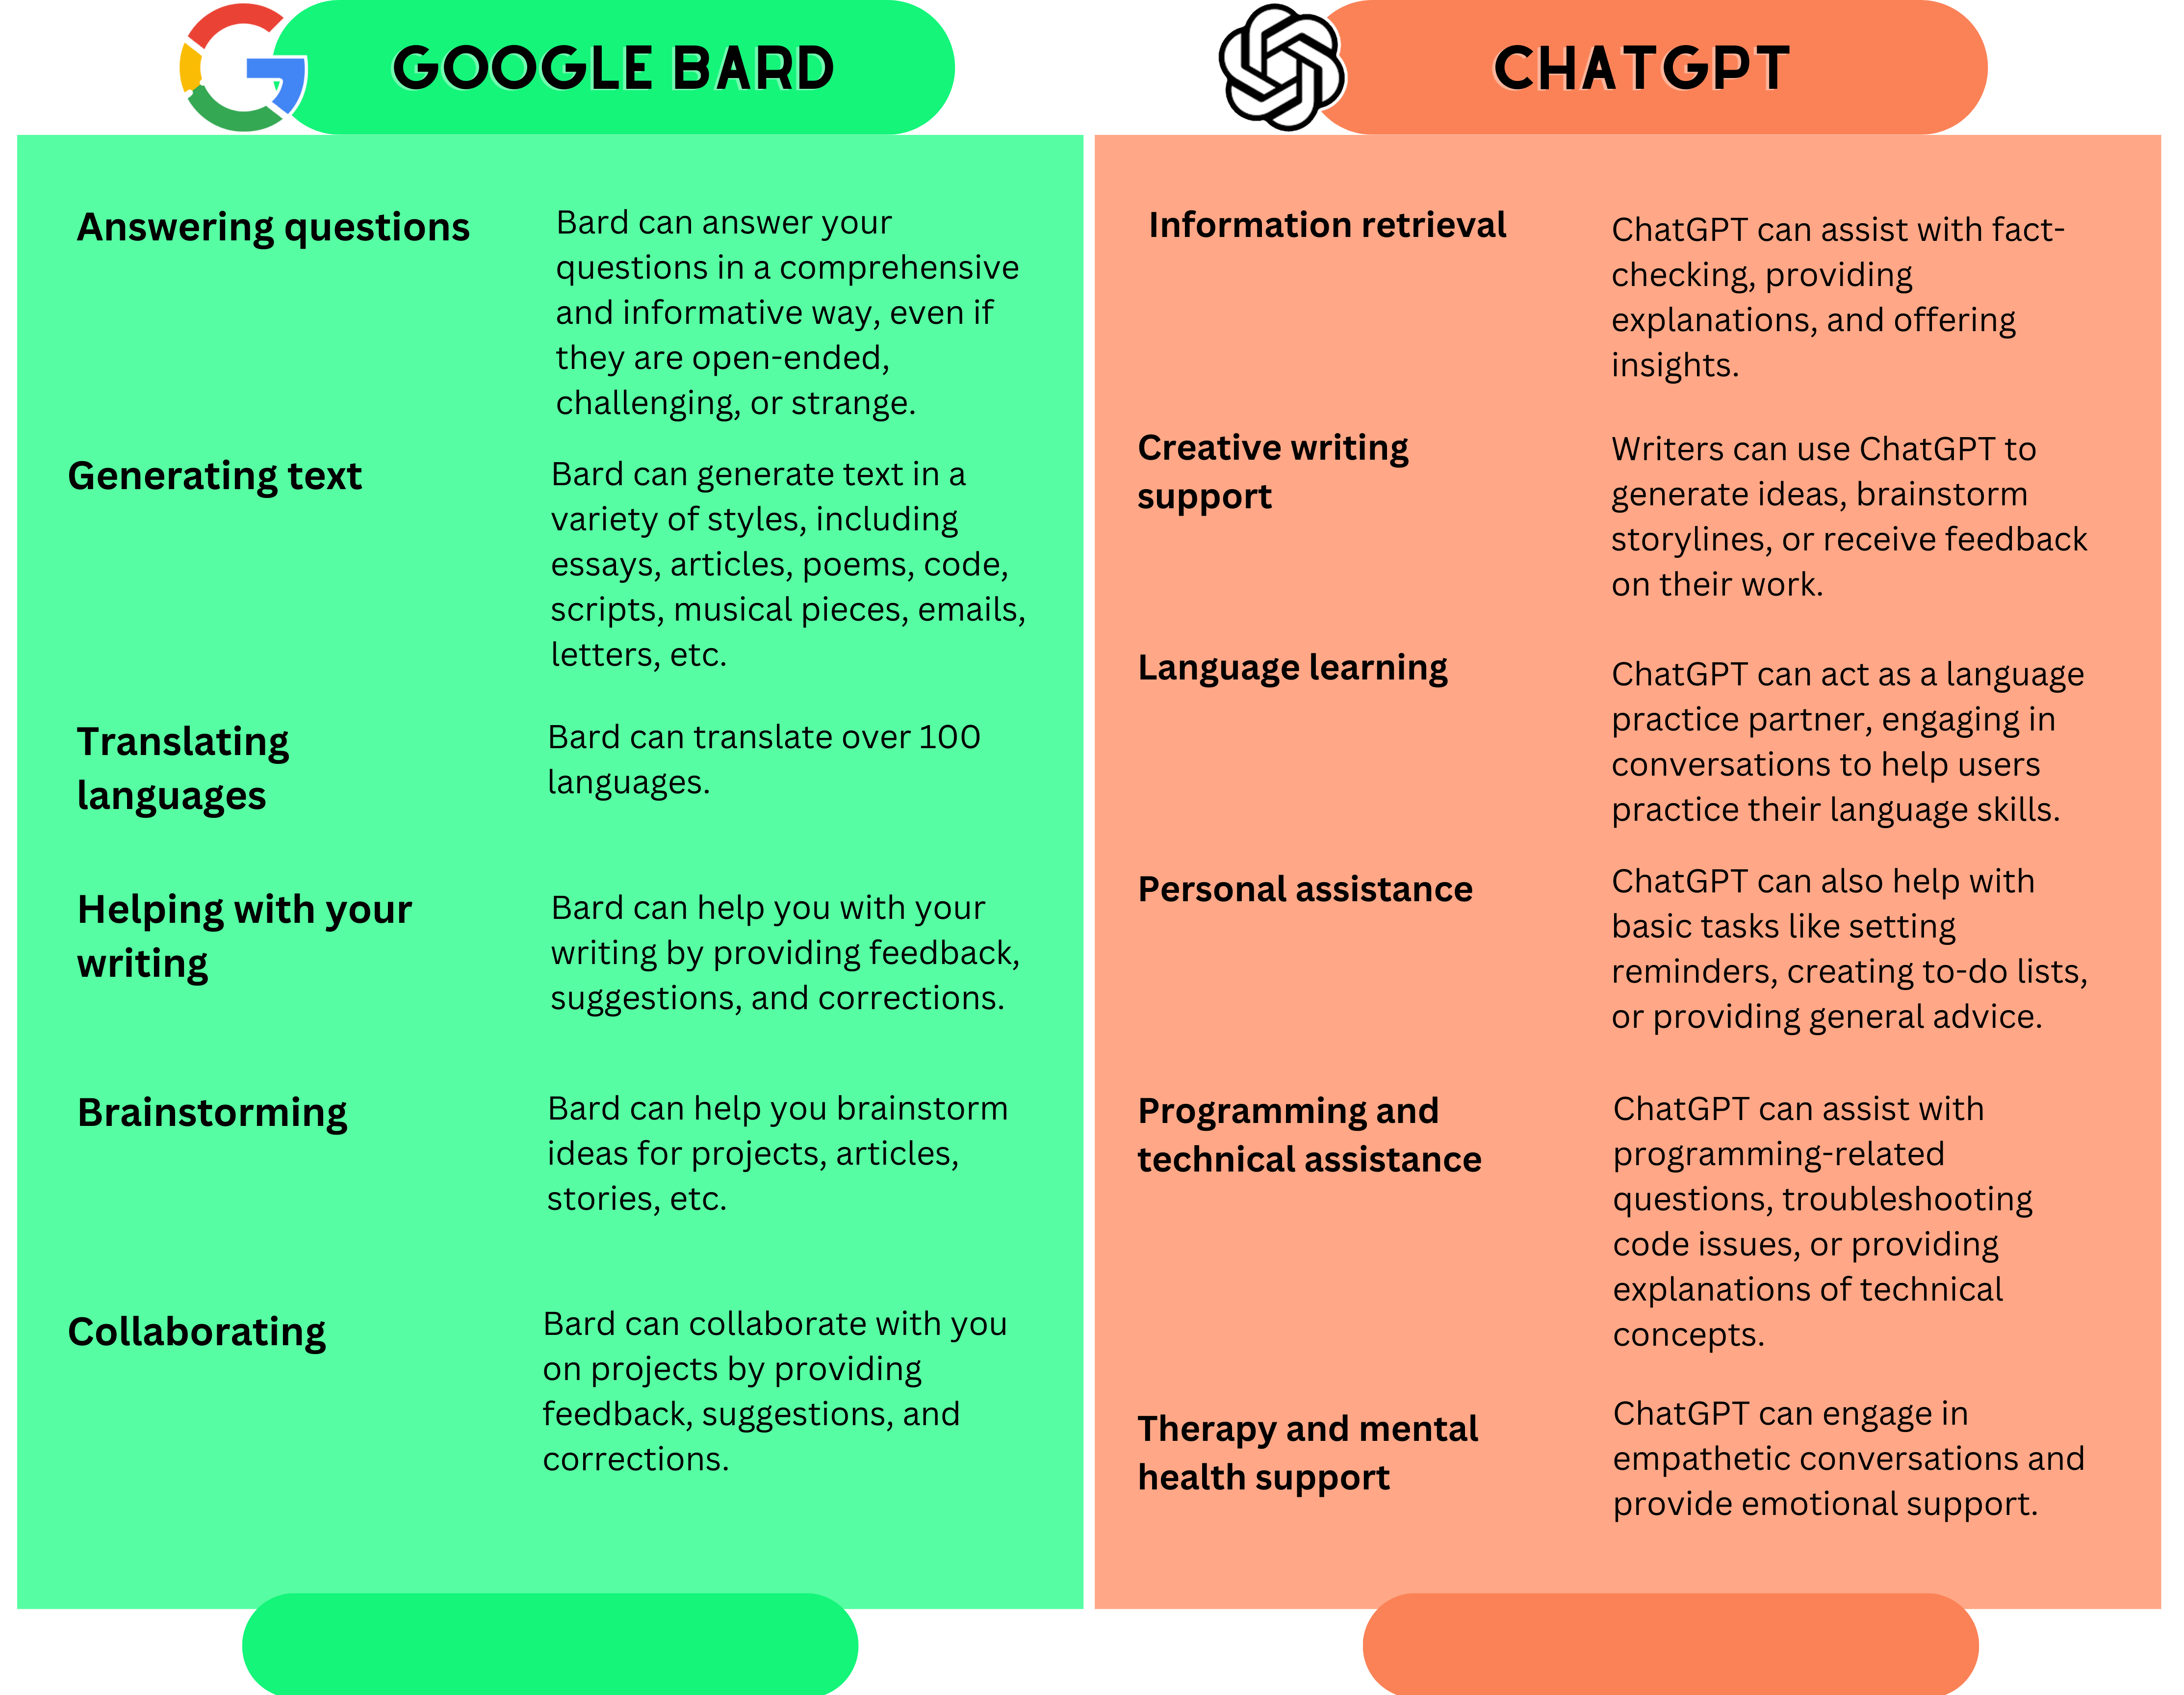 Purpose and Application of Google Bard and ChatGPT